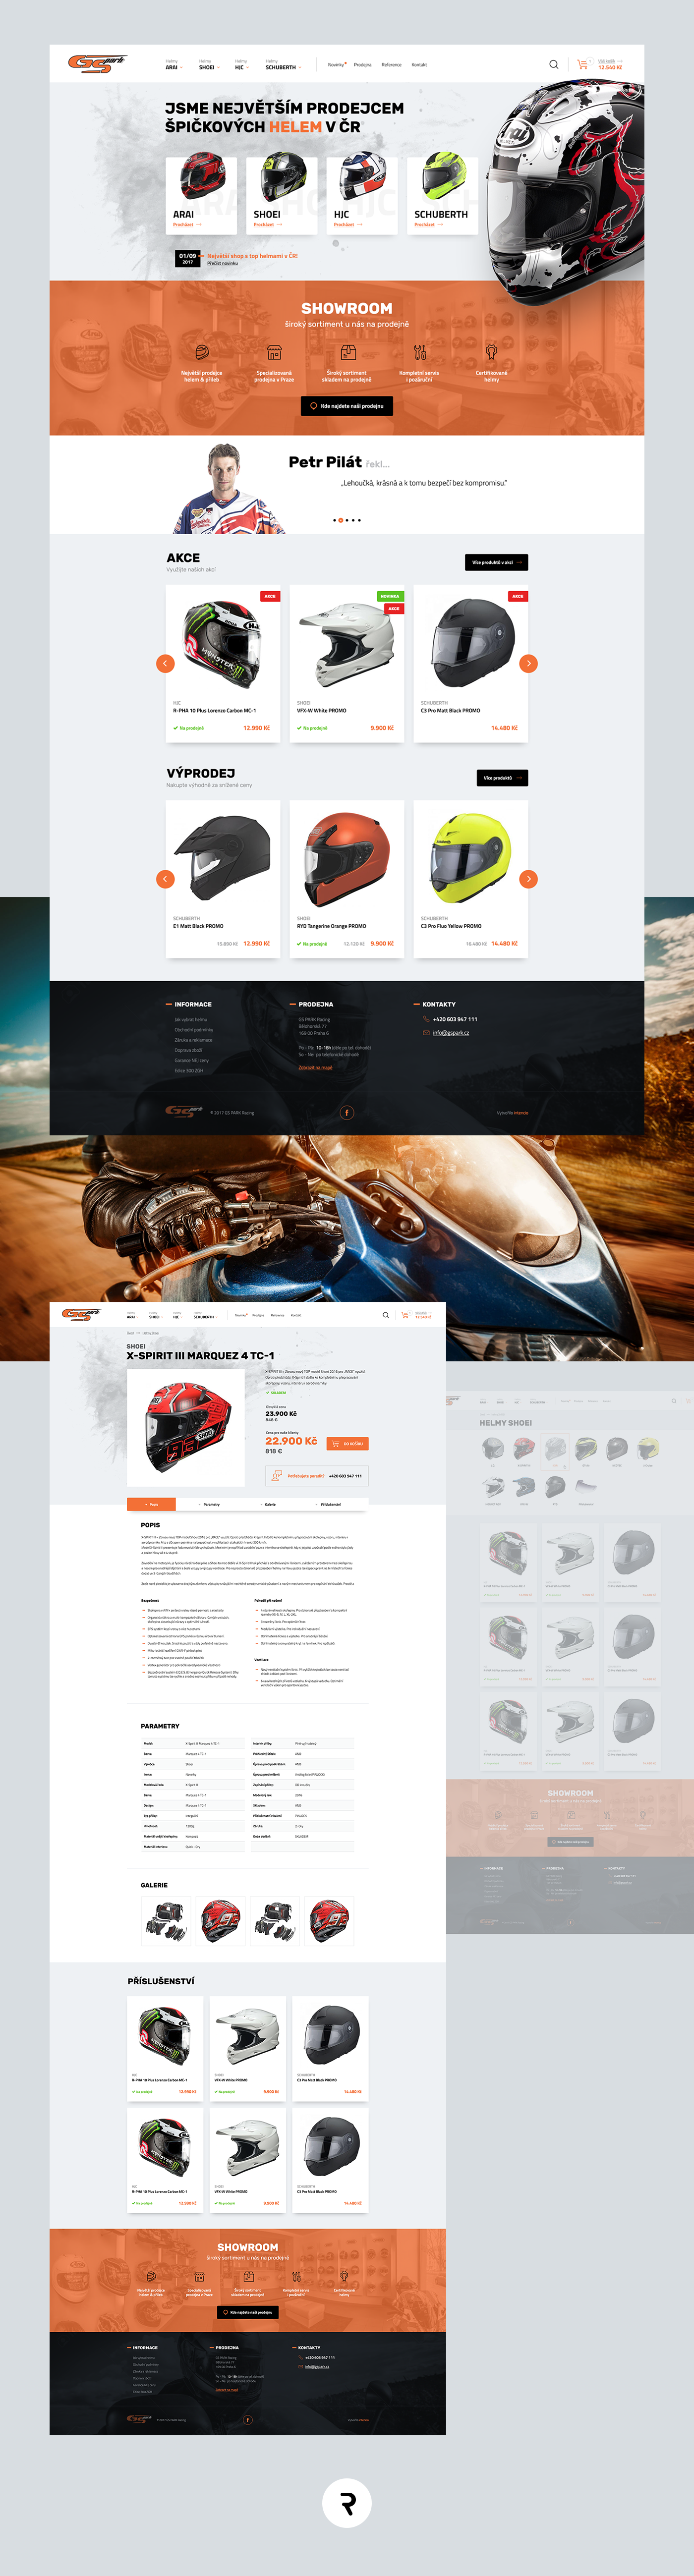 Webdesign Ecommerce eshop Helmet Bike moto